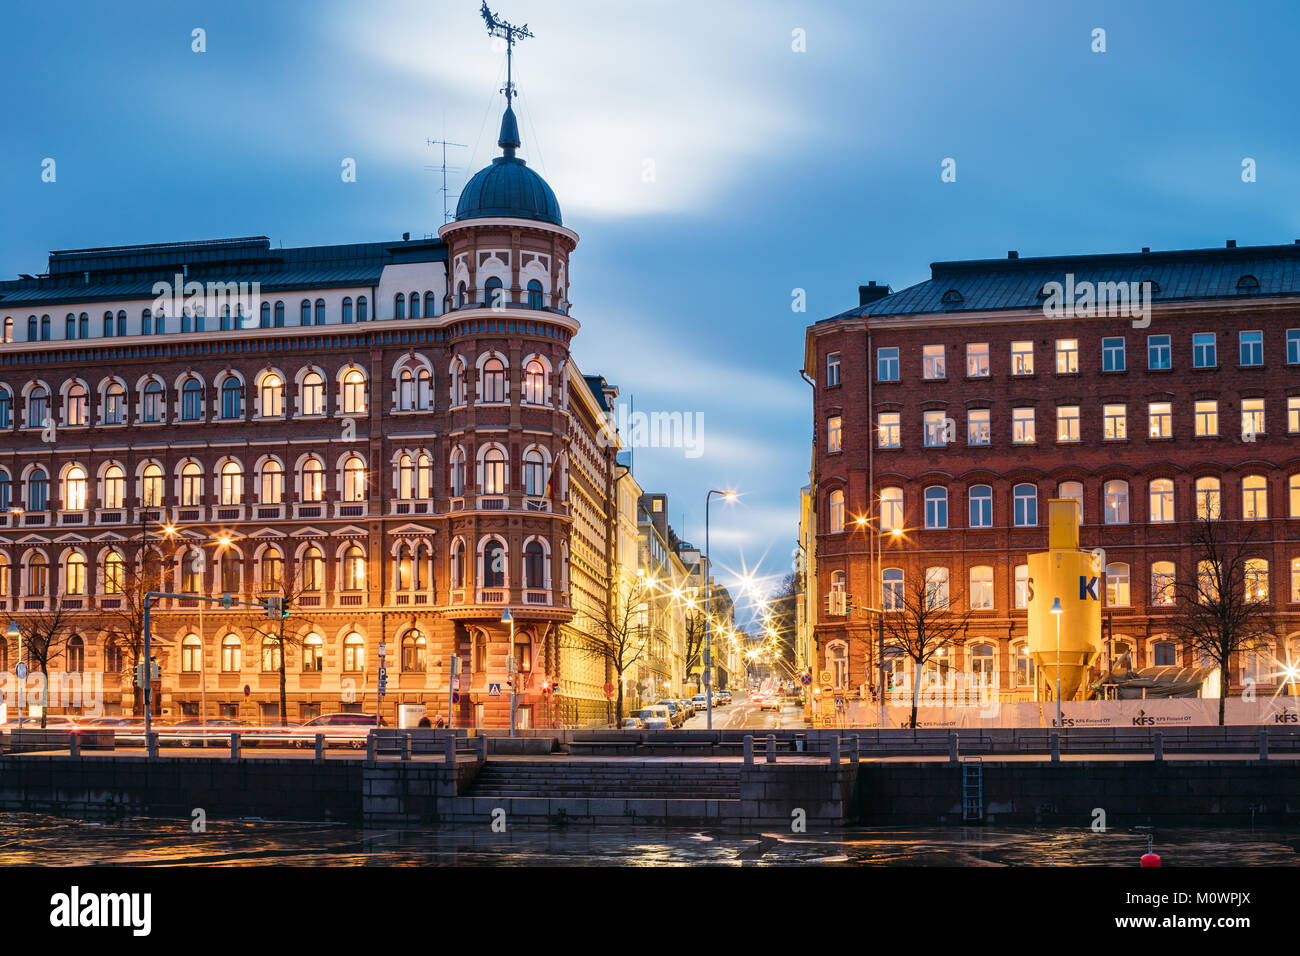 Helsinki, Finlandia - 6 Dicembre 2016: crocevia di Pohjoisranta e Kirkkokatu Street in serata o l'illuminazione notturna. Foto Stock